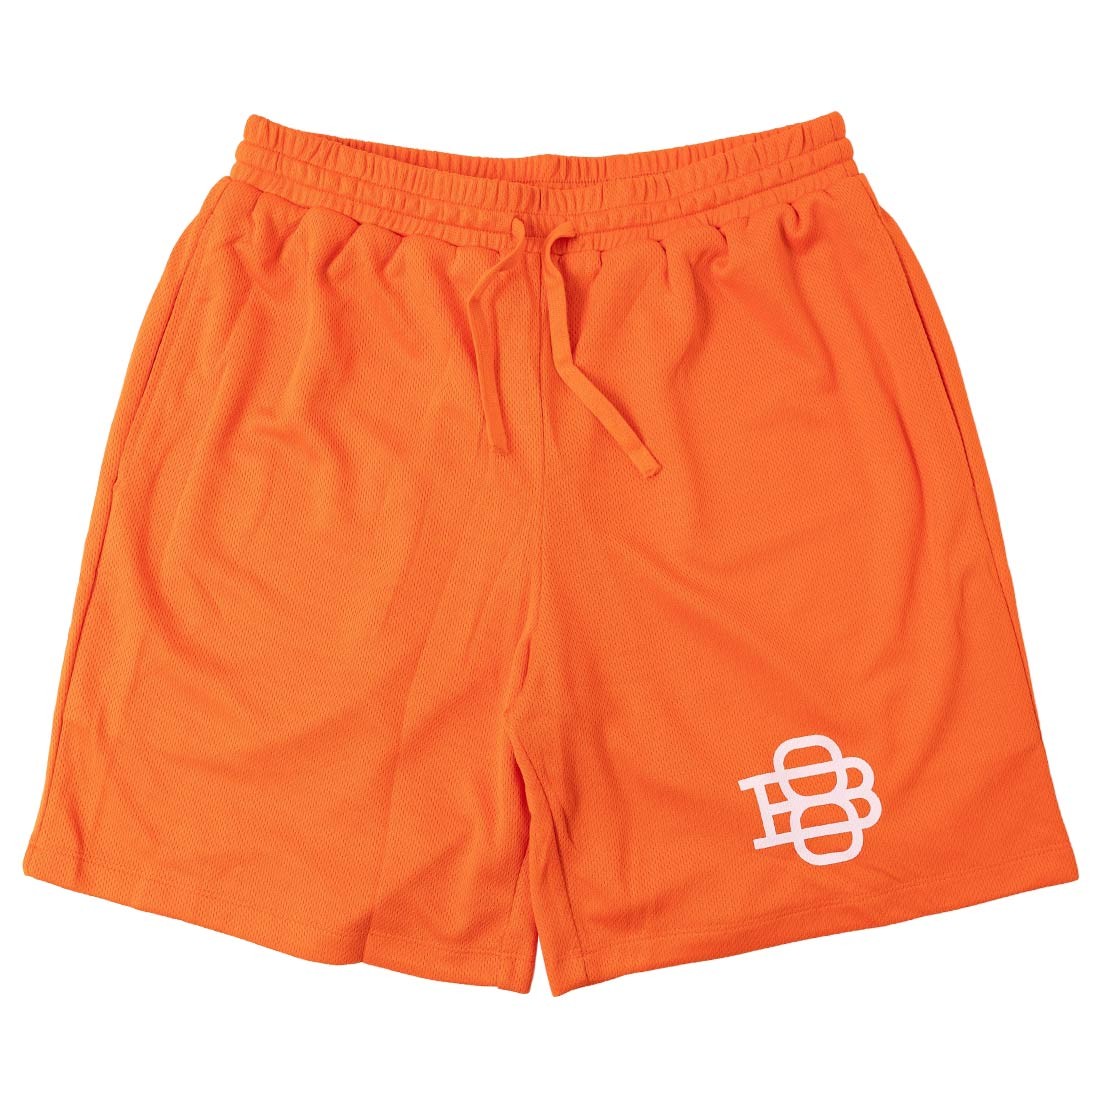 BAIT Men Basketball Logo Shorts (orange)